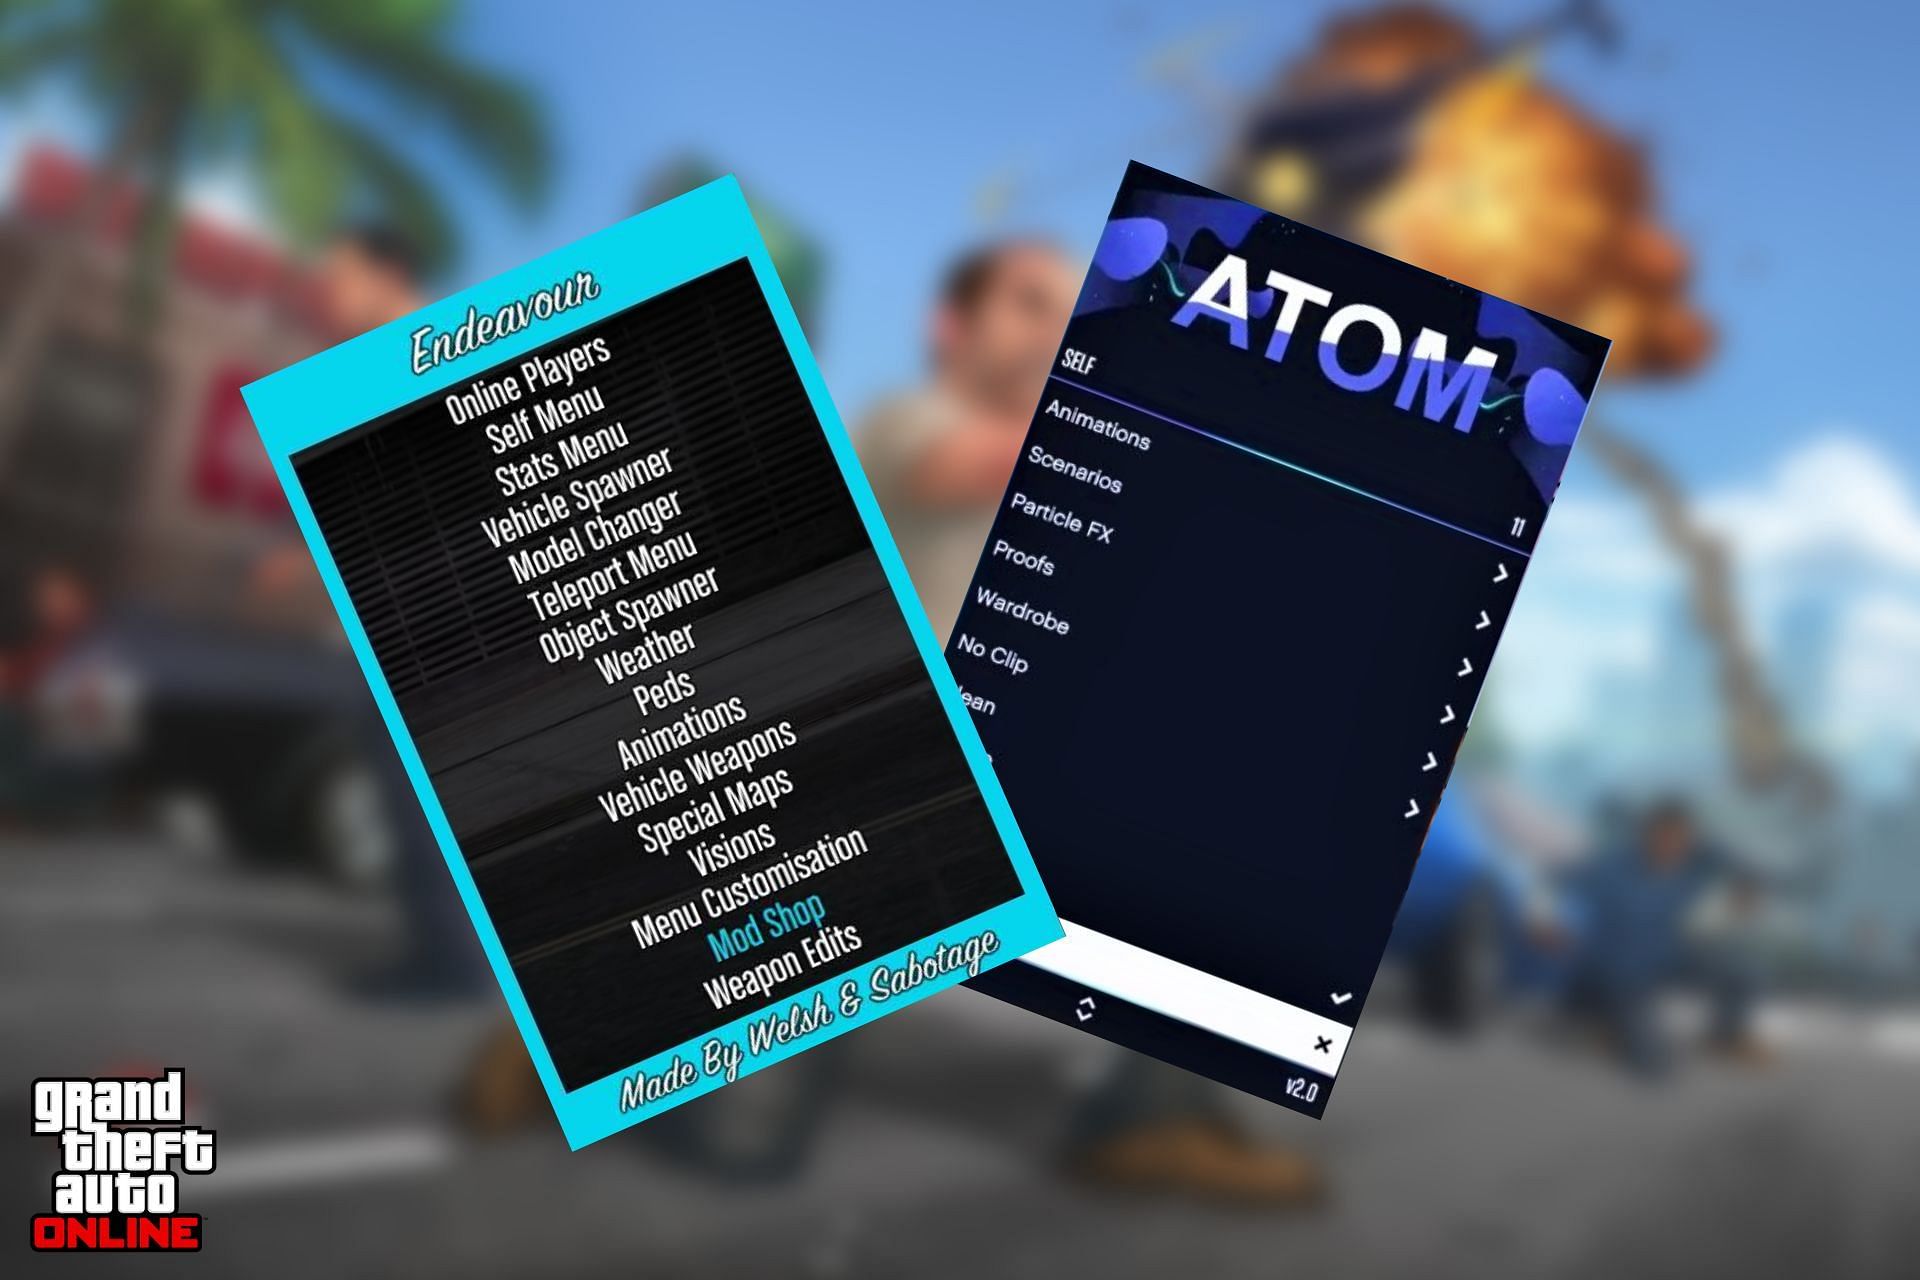 Why GTA Online players should avoid using mod menus